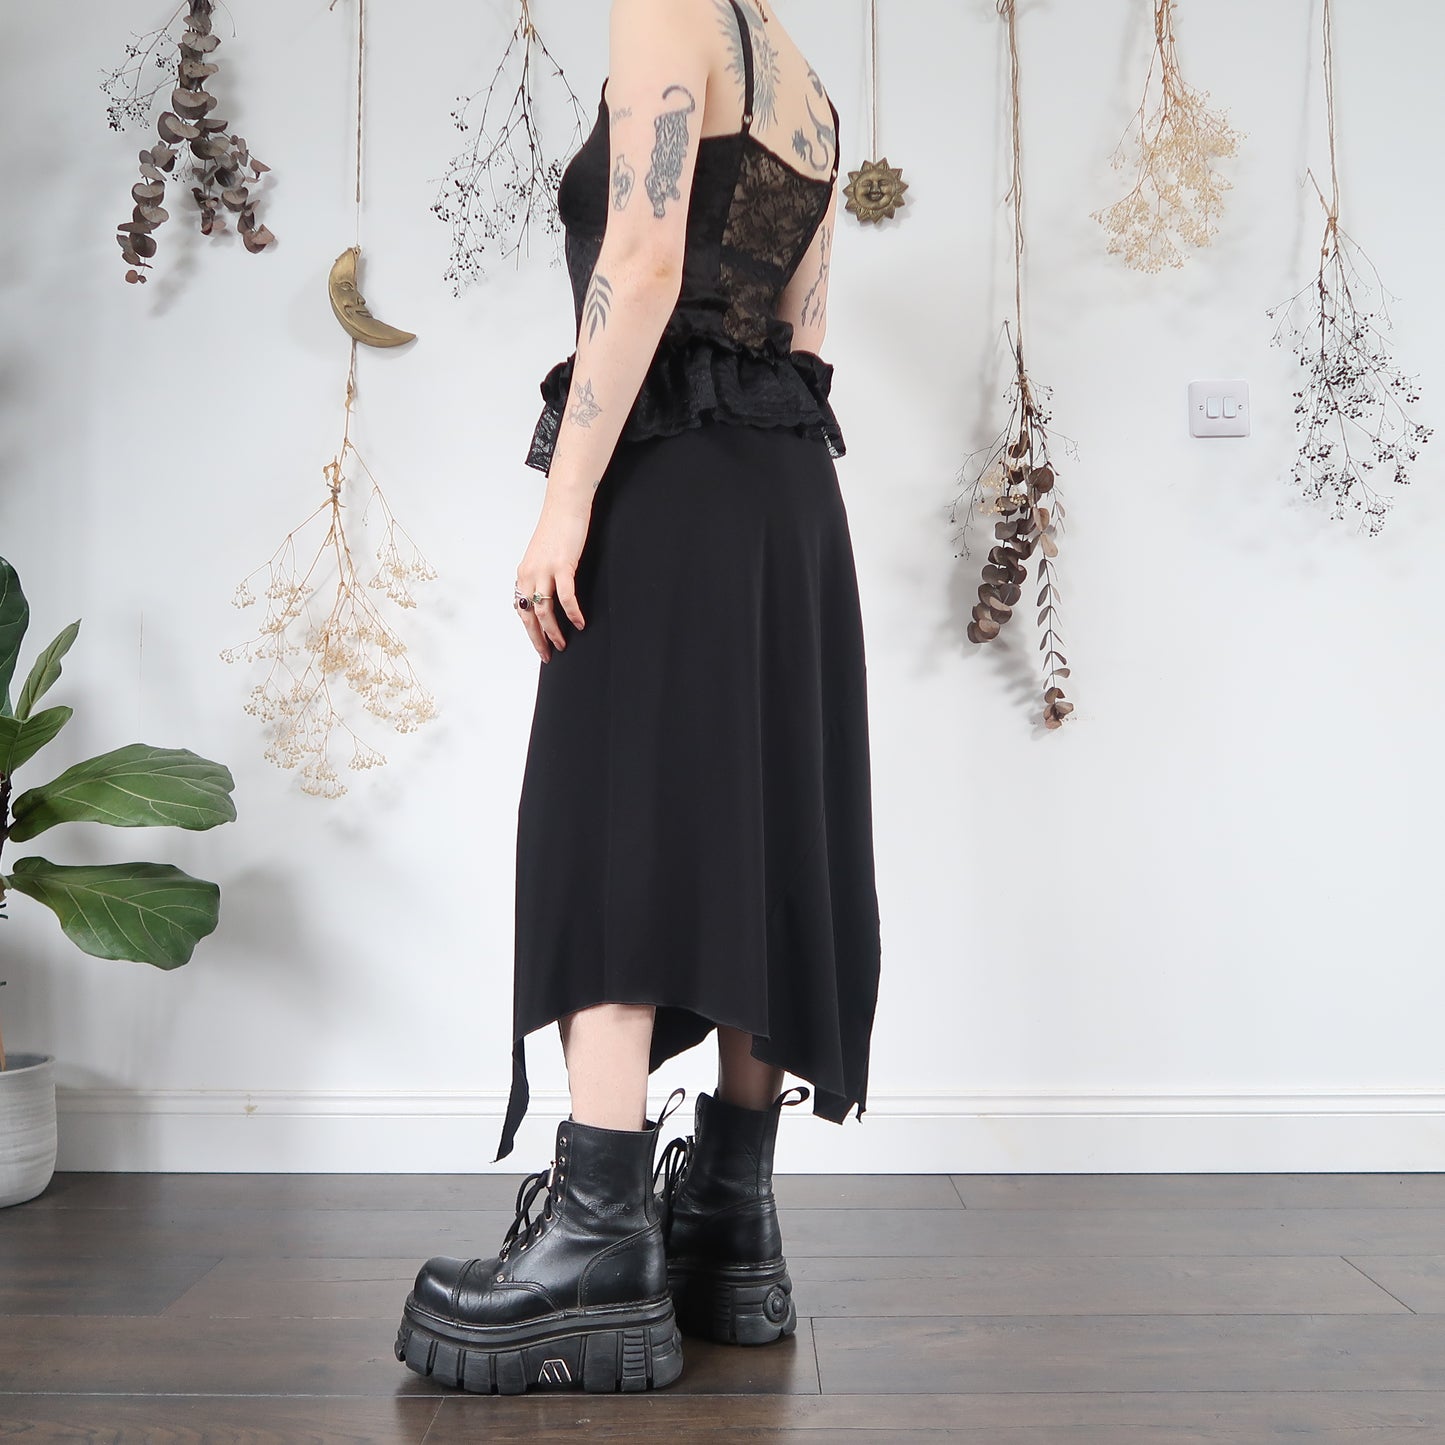 Black skirt - size L/XL